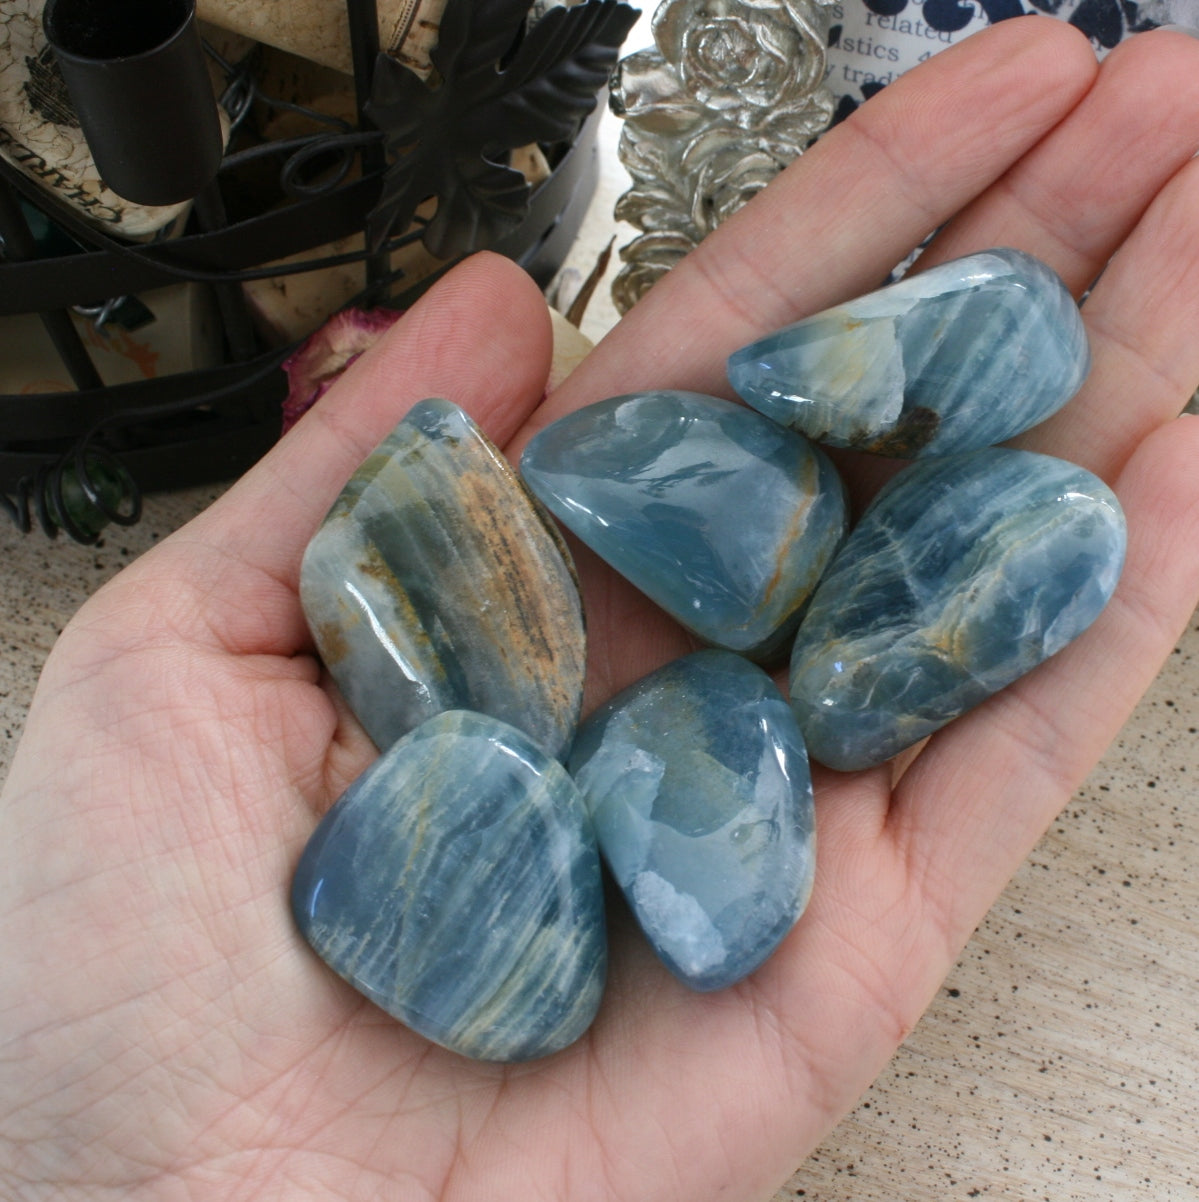 Blue Calcite / Blue Onyx Tumbled Stone from Argentina, also called Lemurian Aquatine Calcite, TUM2